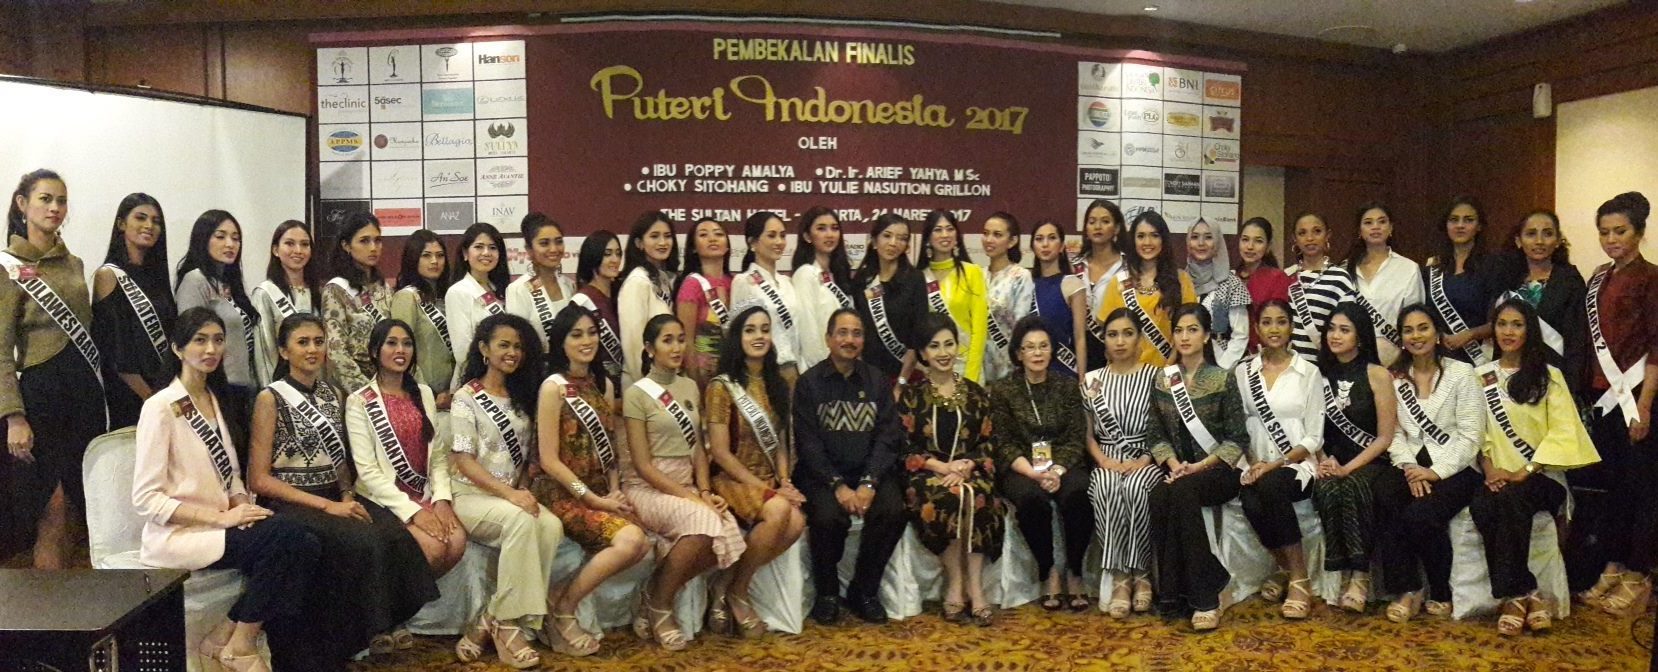 Menteri Pariwisata bekali para finalis ‘Puteri Indonesia 2017’